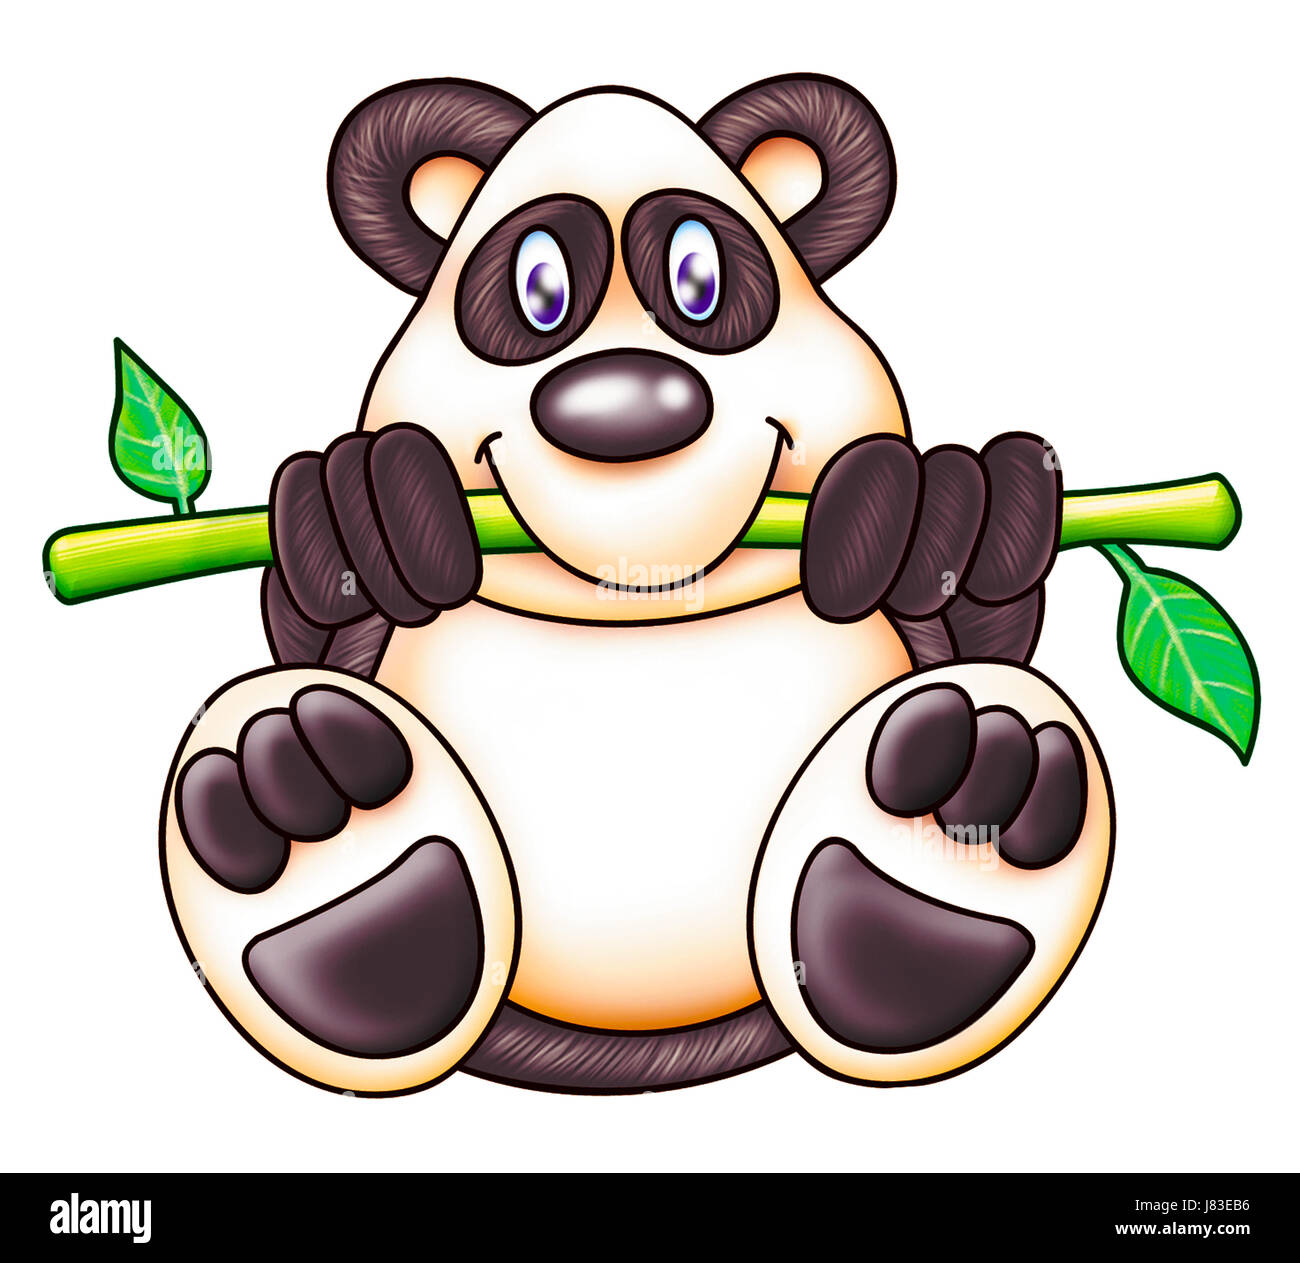 How to Draw Panda || Cartoon Animal Drawing serie Day 10